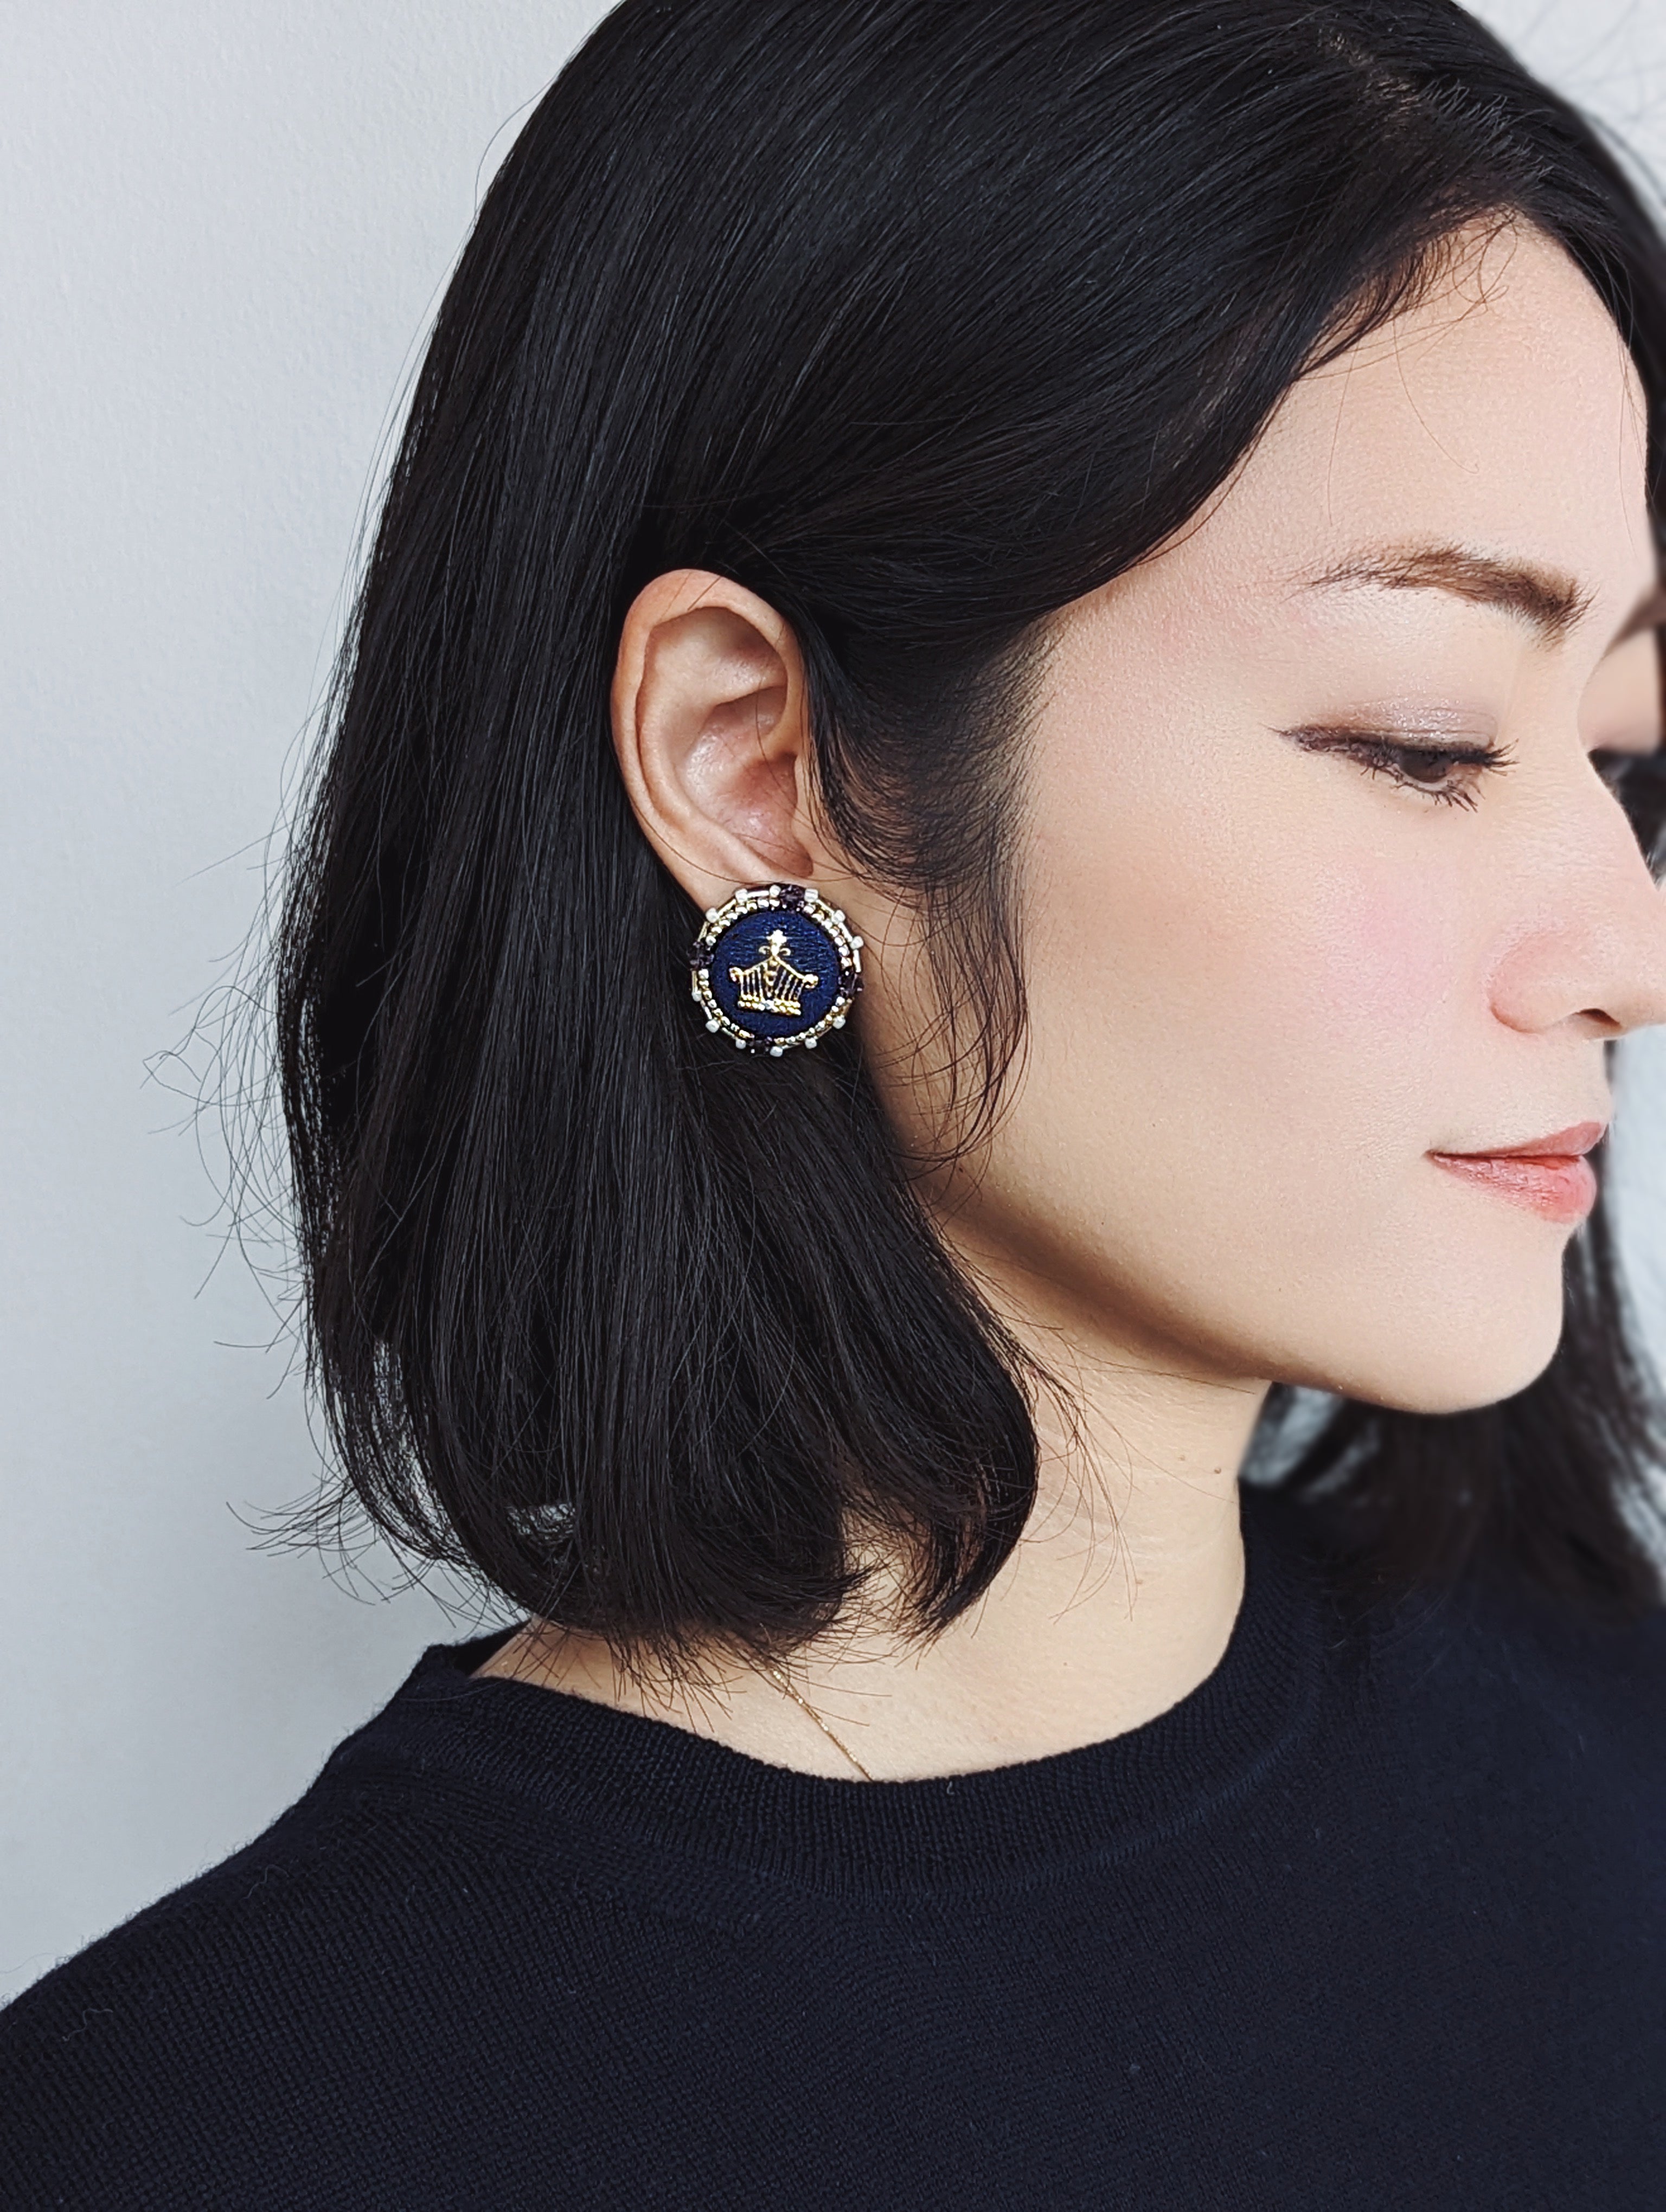 Kinsai Ear Accessory - Blu